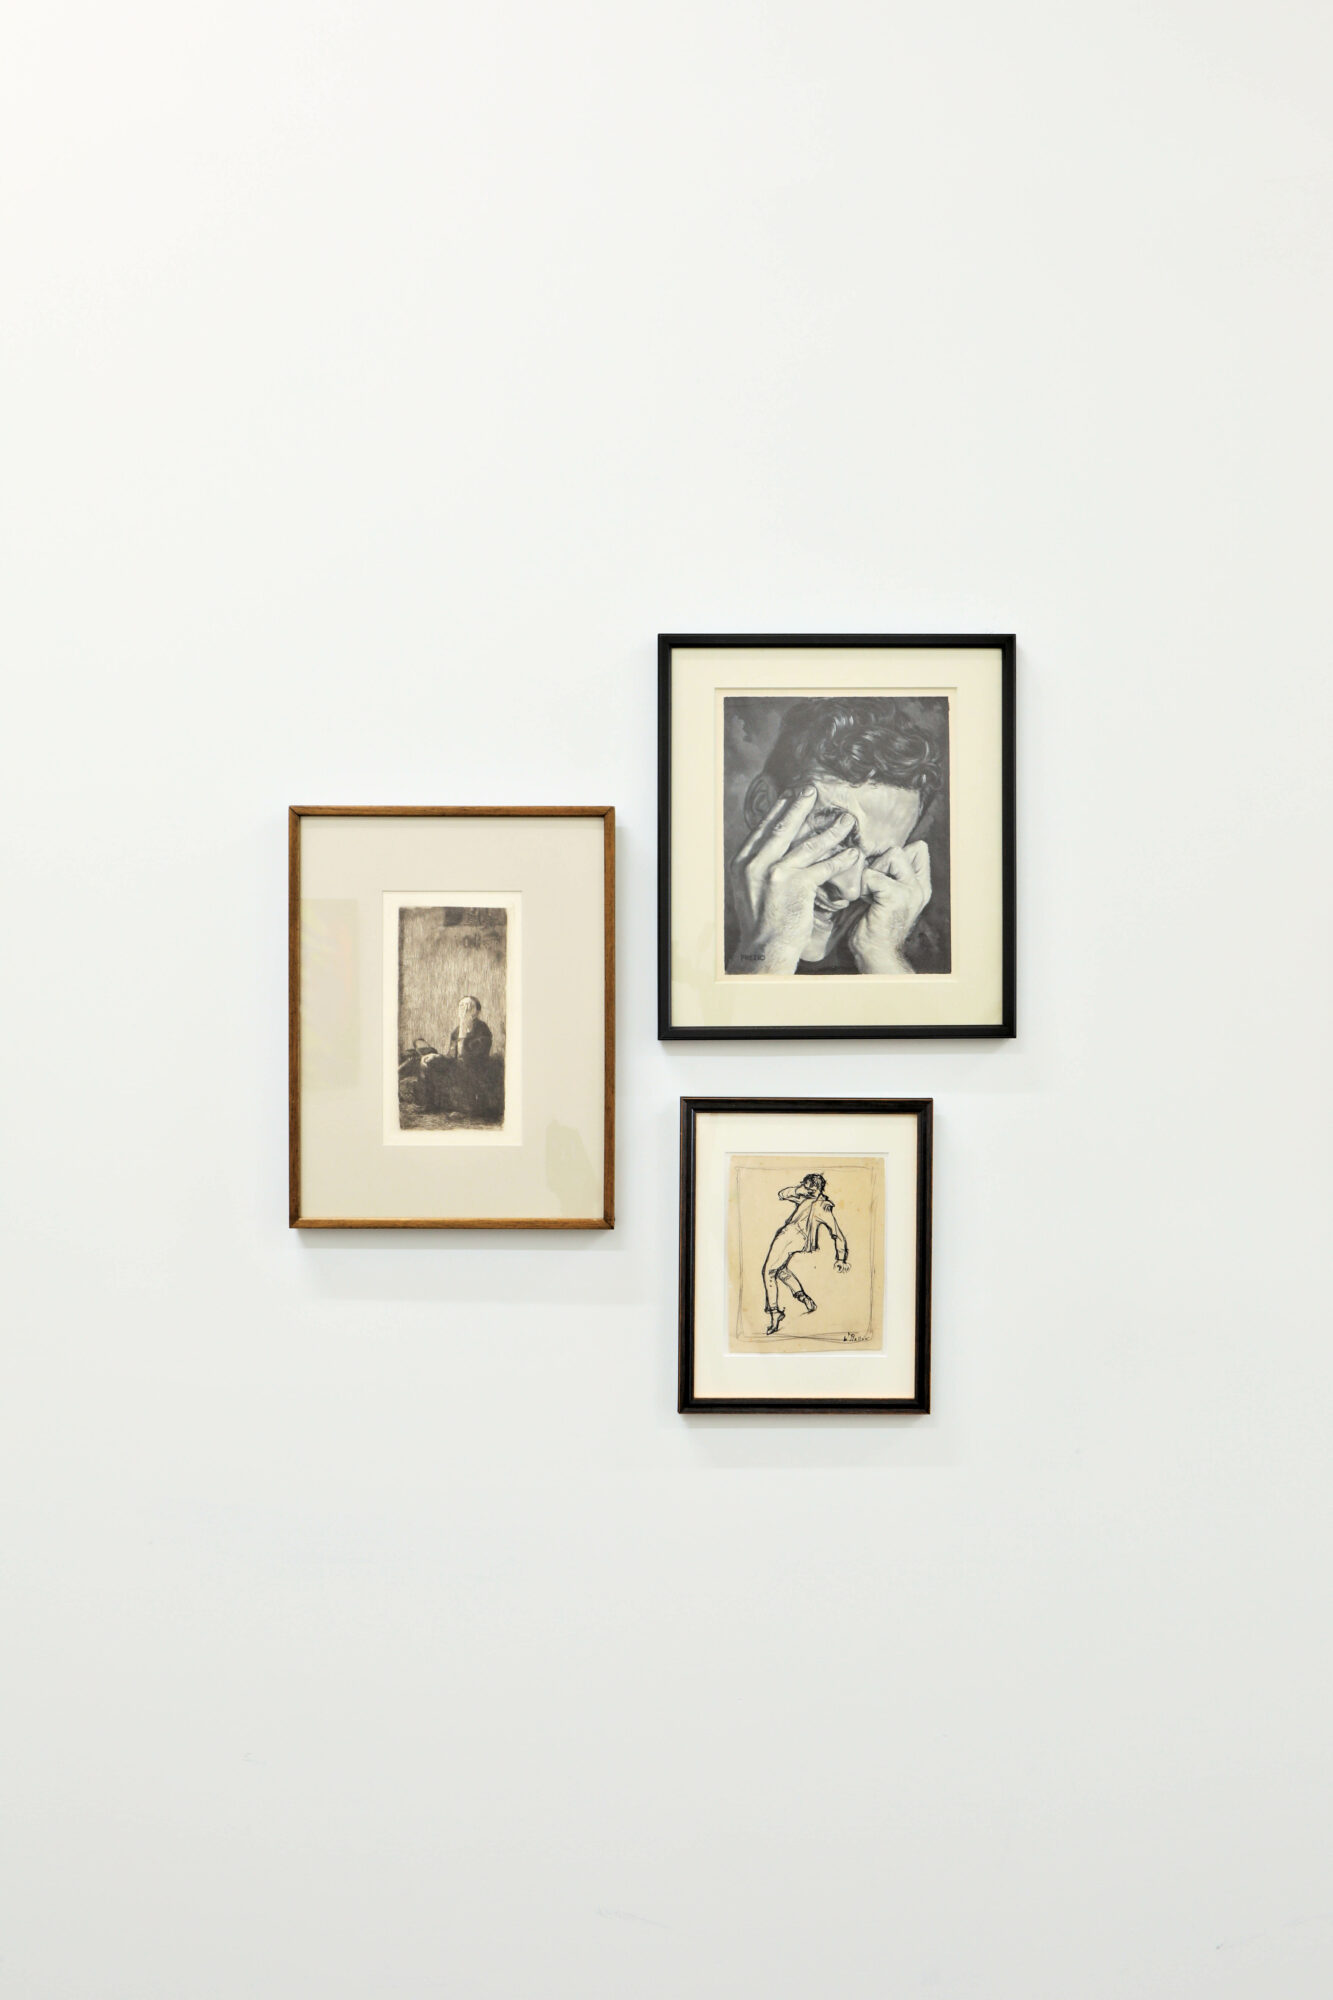 Three framed artworks on view at "B" Dry Goods, part of the New York art scene